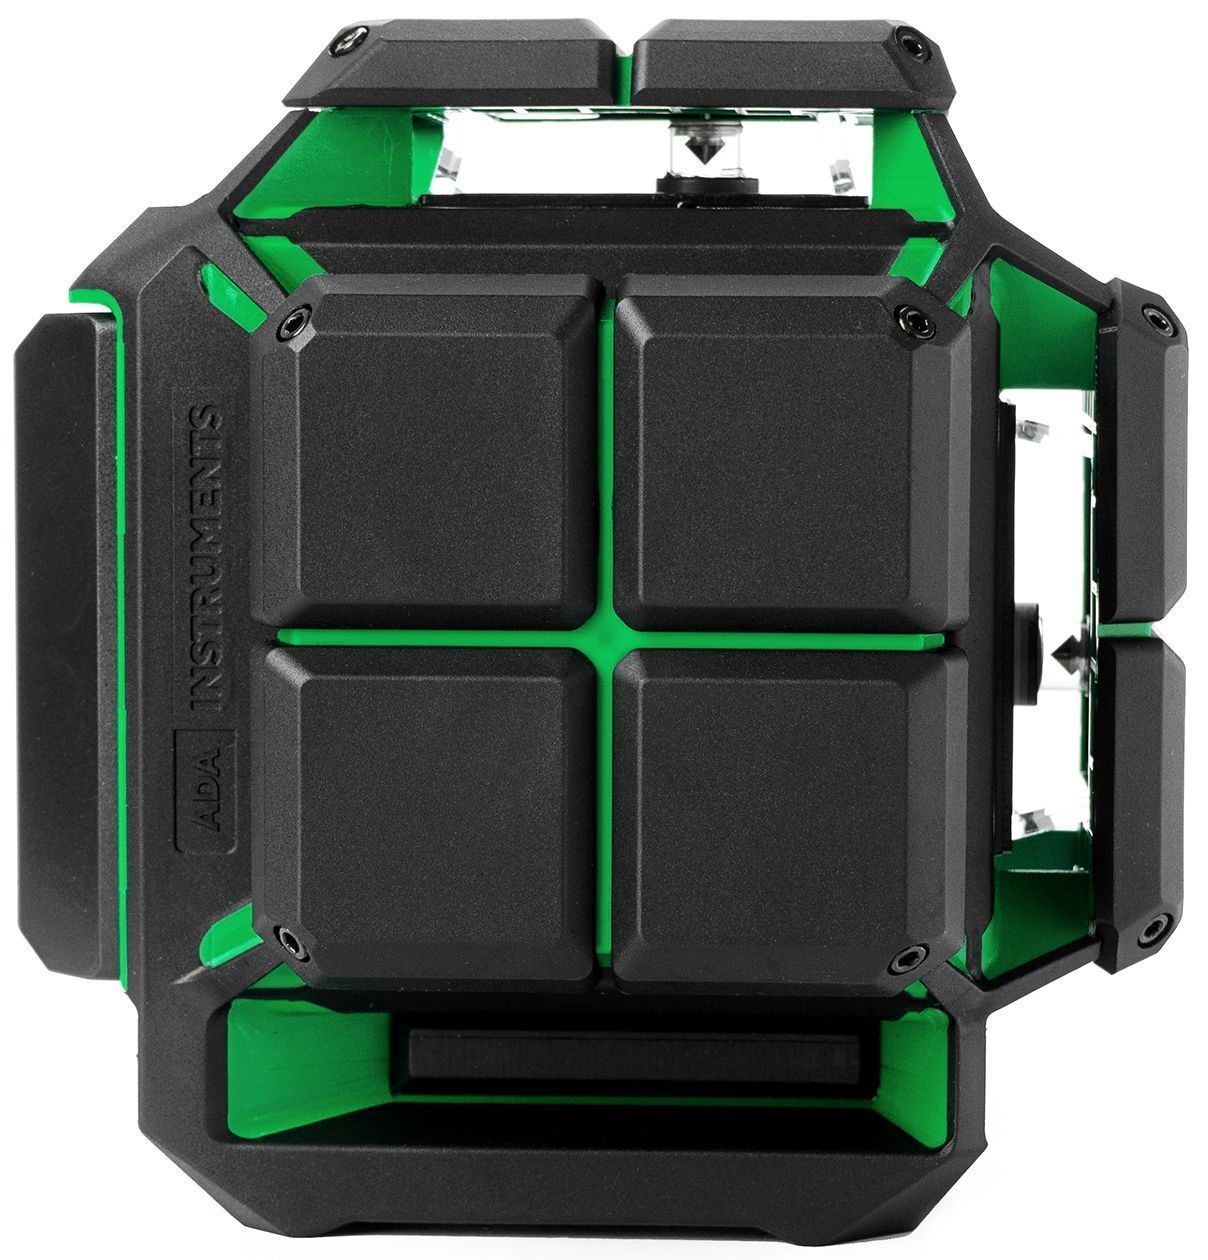 Лазерный нивелир Ada LaserTank 3-360 Green Basic Edition А00633 Ada от магазина Tehnorama